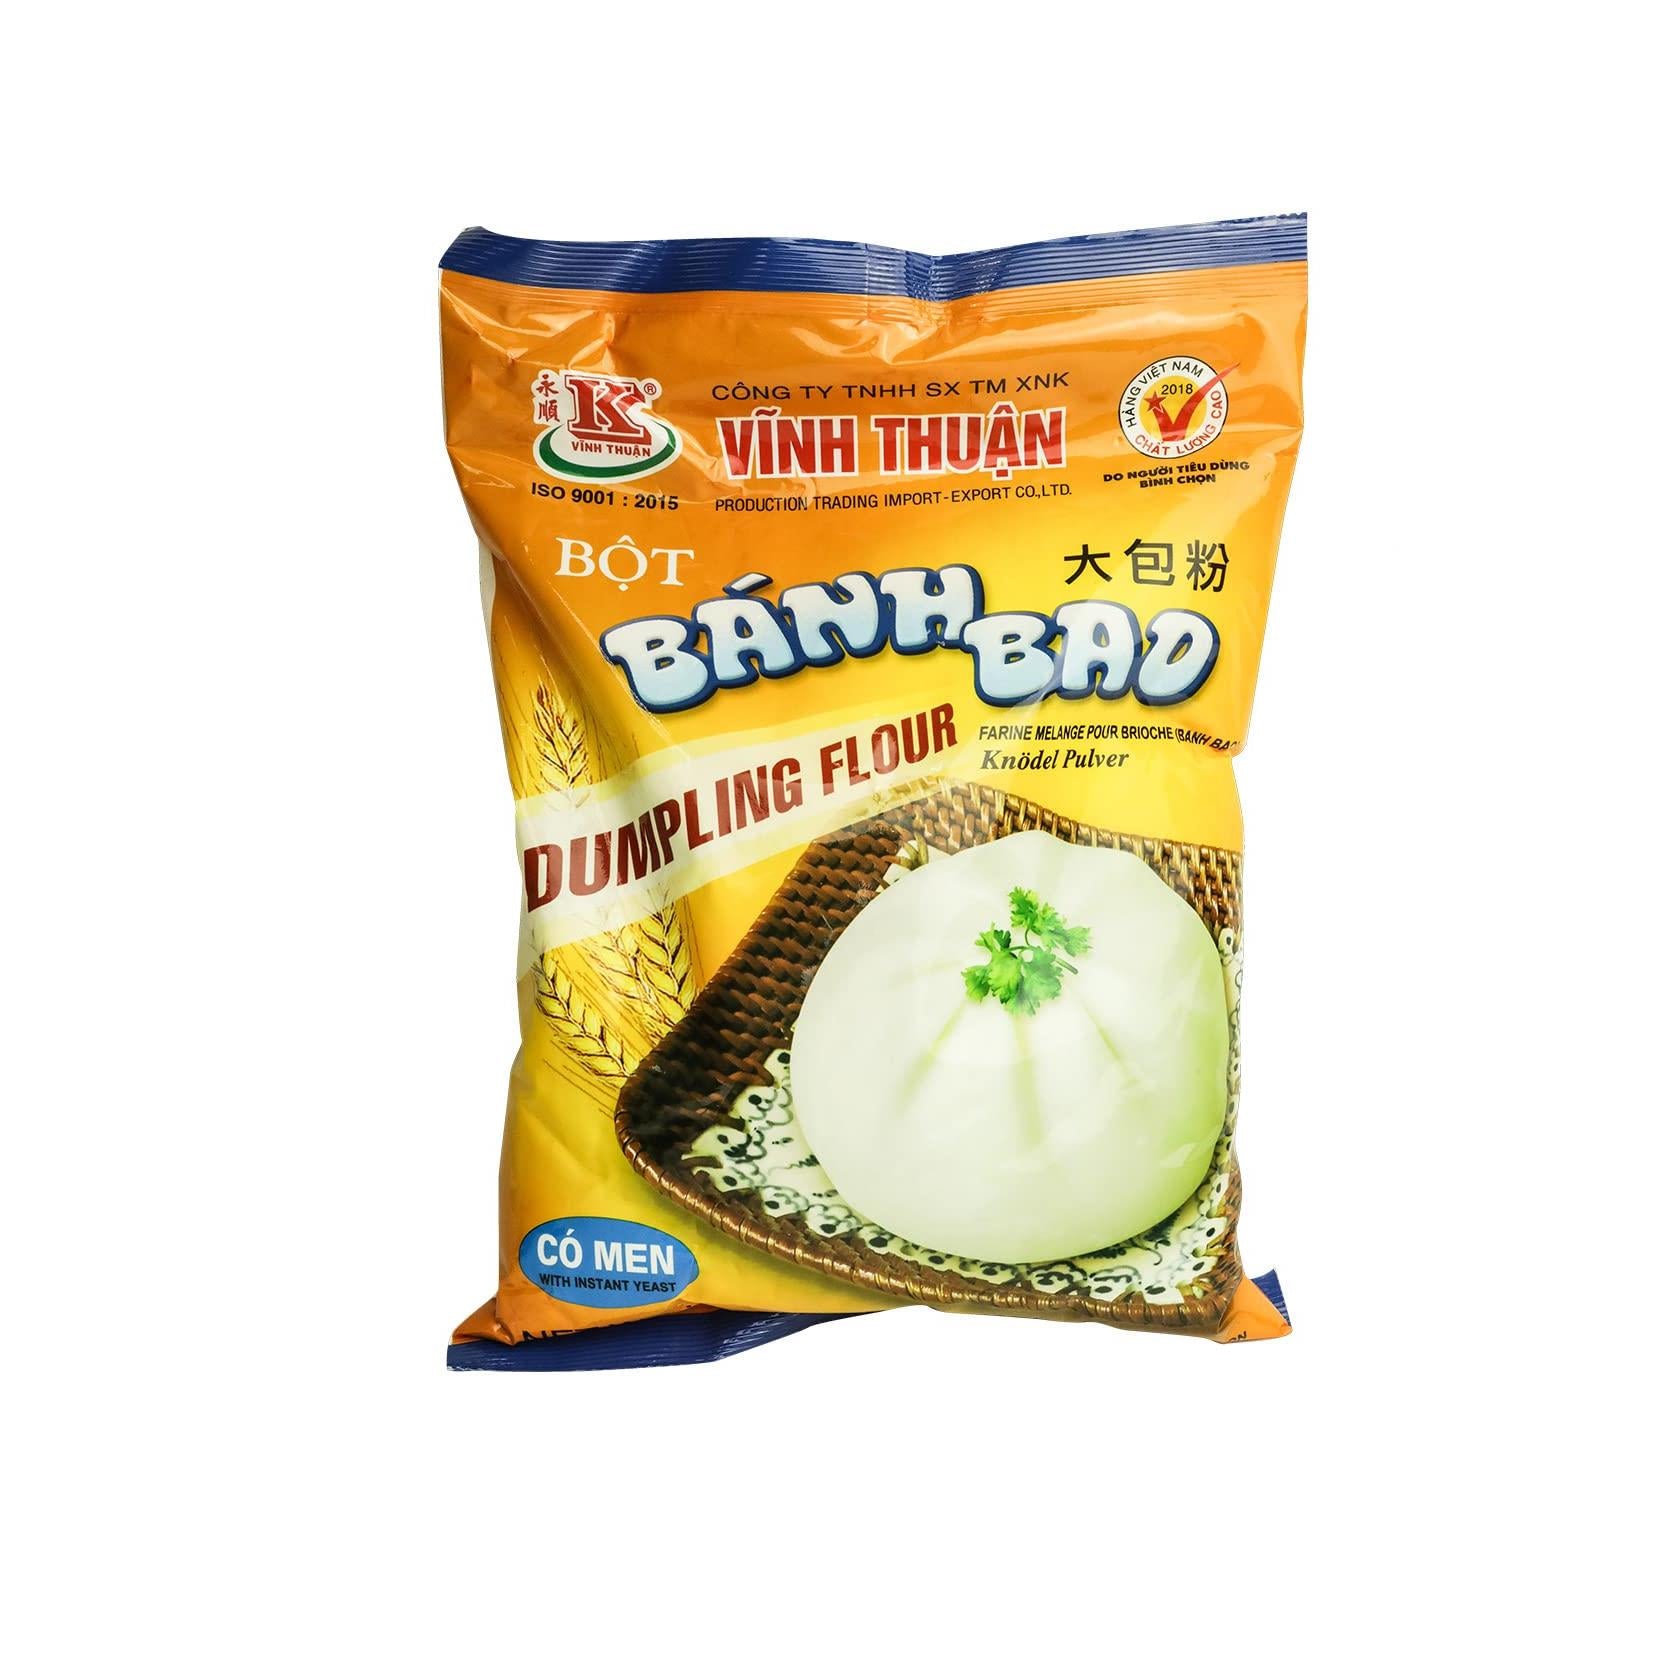 Vinh Thuan Dumpling Flour Bot Banh Bao, 35.3 oz (1 Kg)